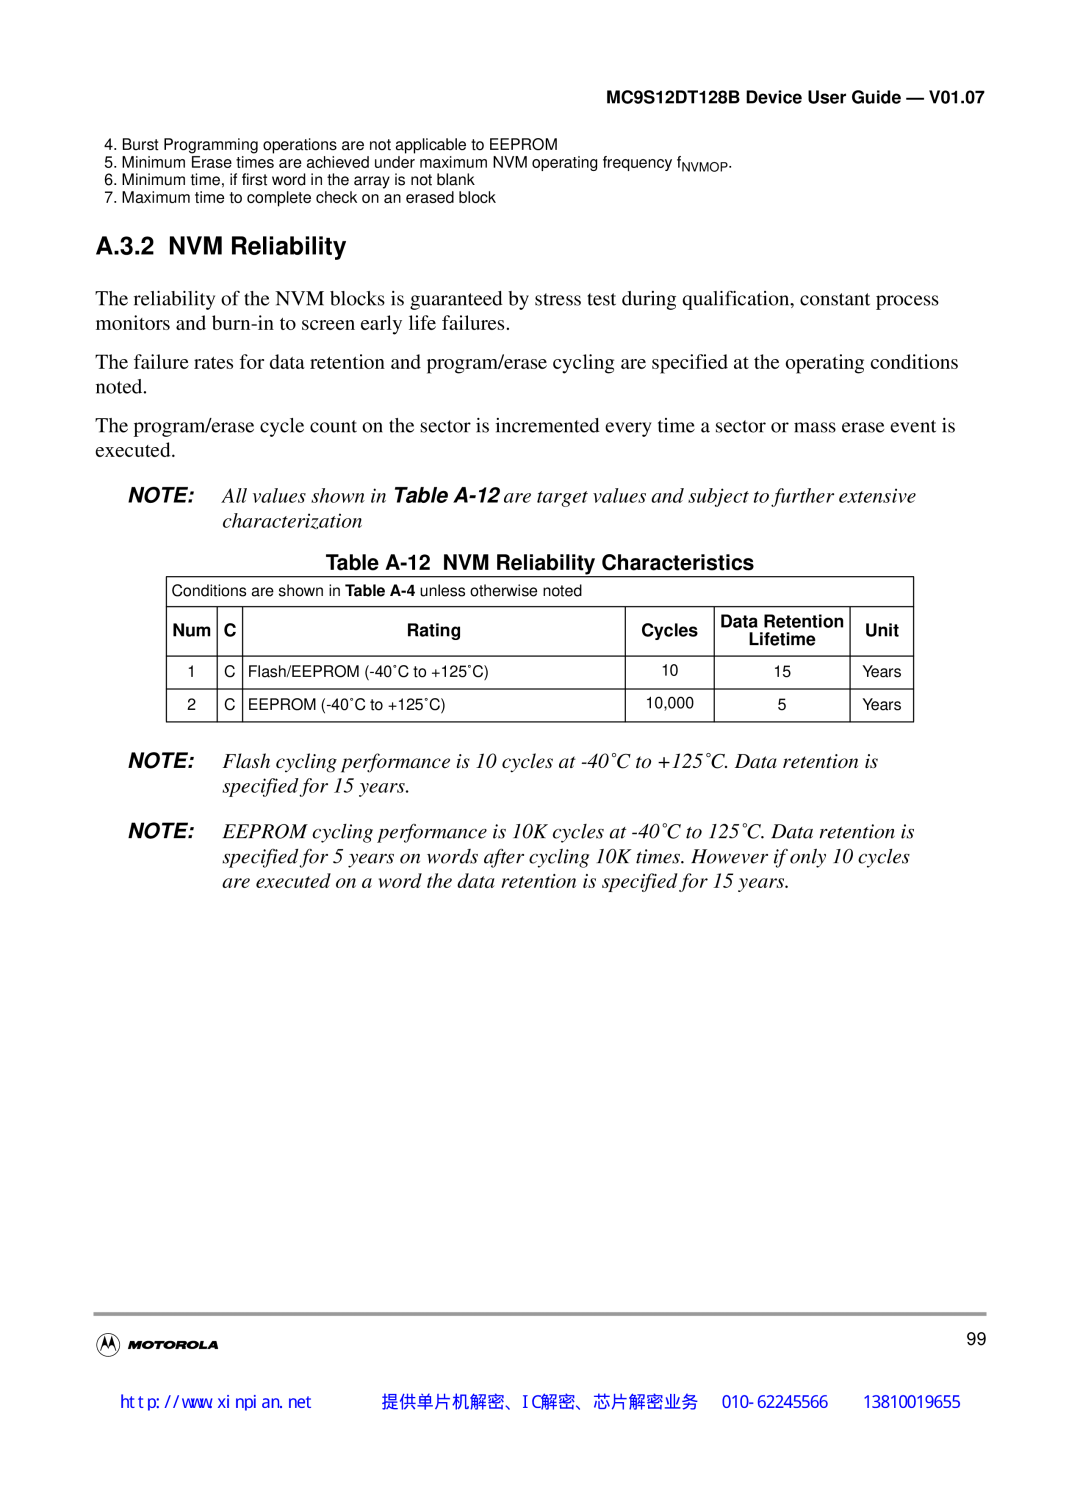 Motorola MC9S12DG128B, MC9S12DT128B, MC9S12DB128B manual A.3.2 NVM Reliability, Table A-12 NVM Reliability Characteristics 